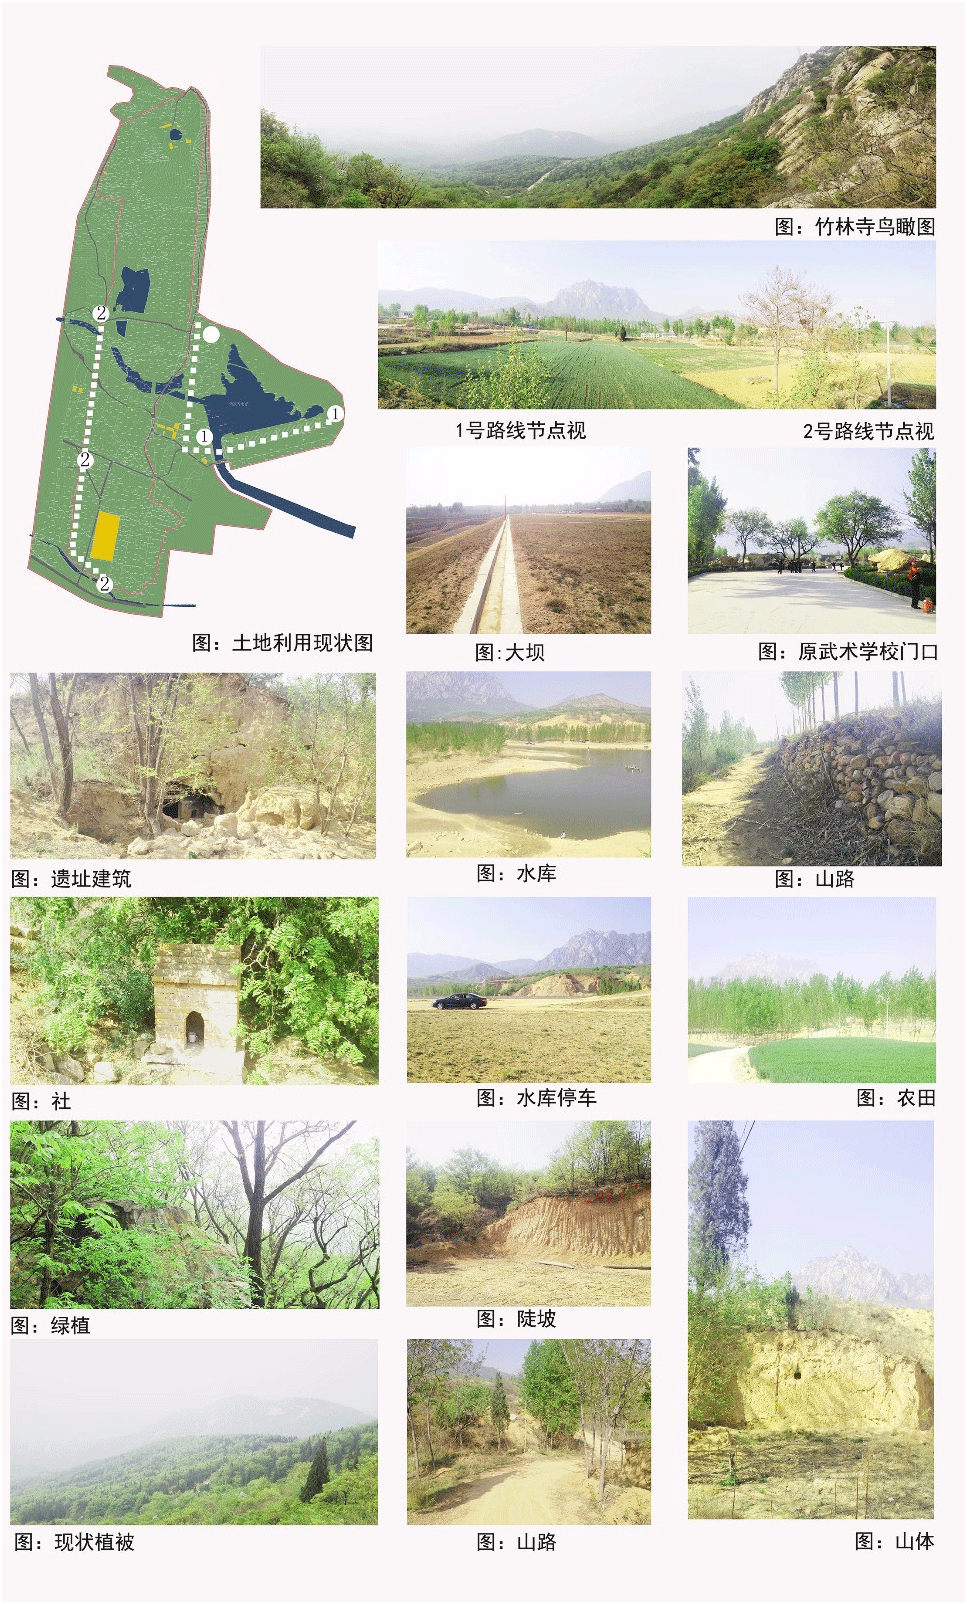 Master plan of shengzhulin temple in Dengfeng Henan Province(图7)